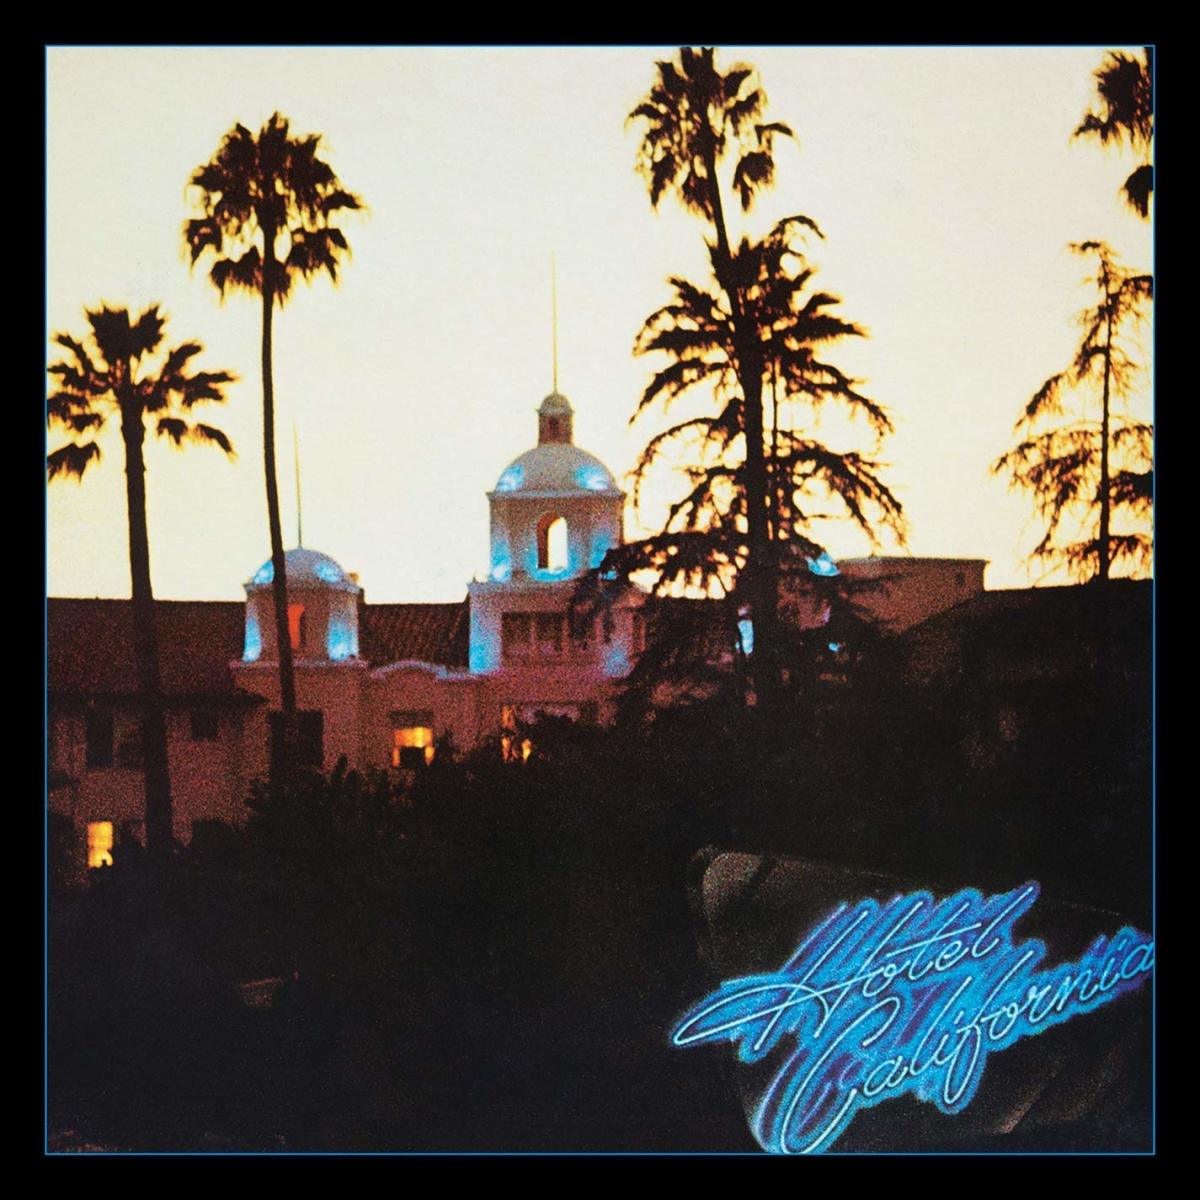 eagles-hotel-california-cover-art